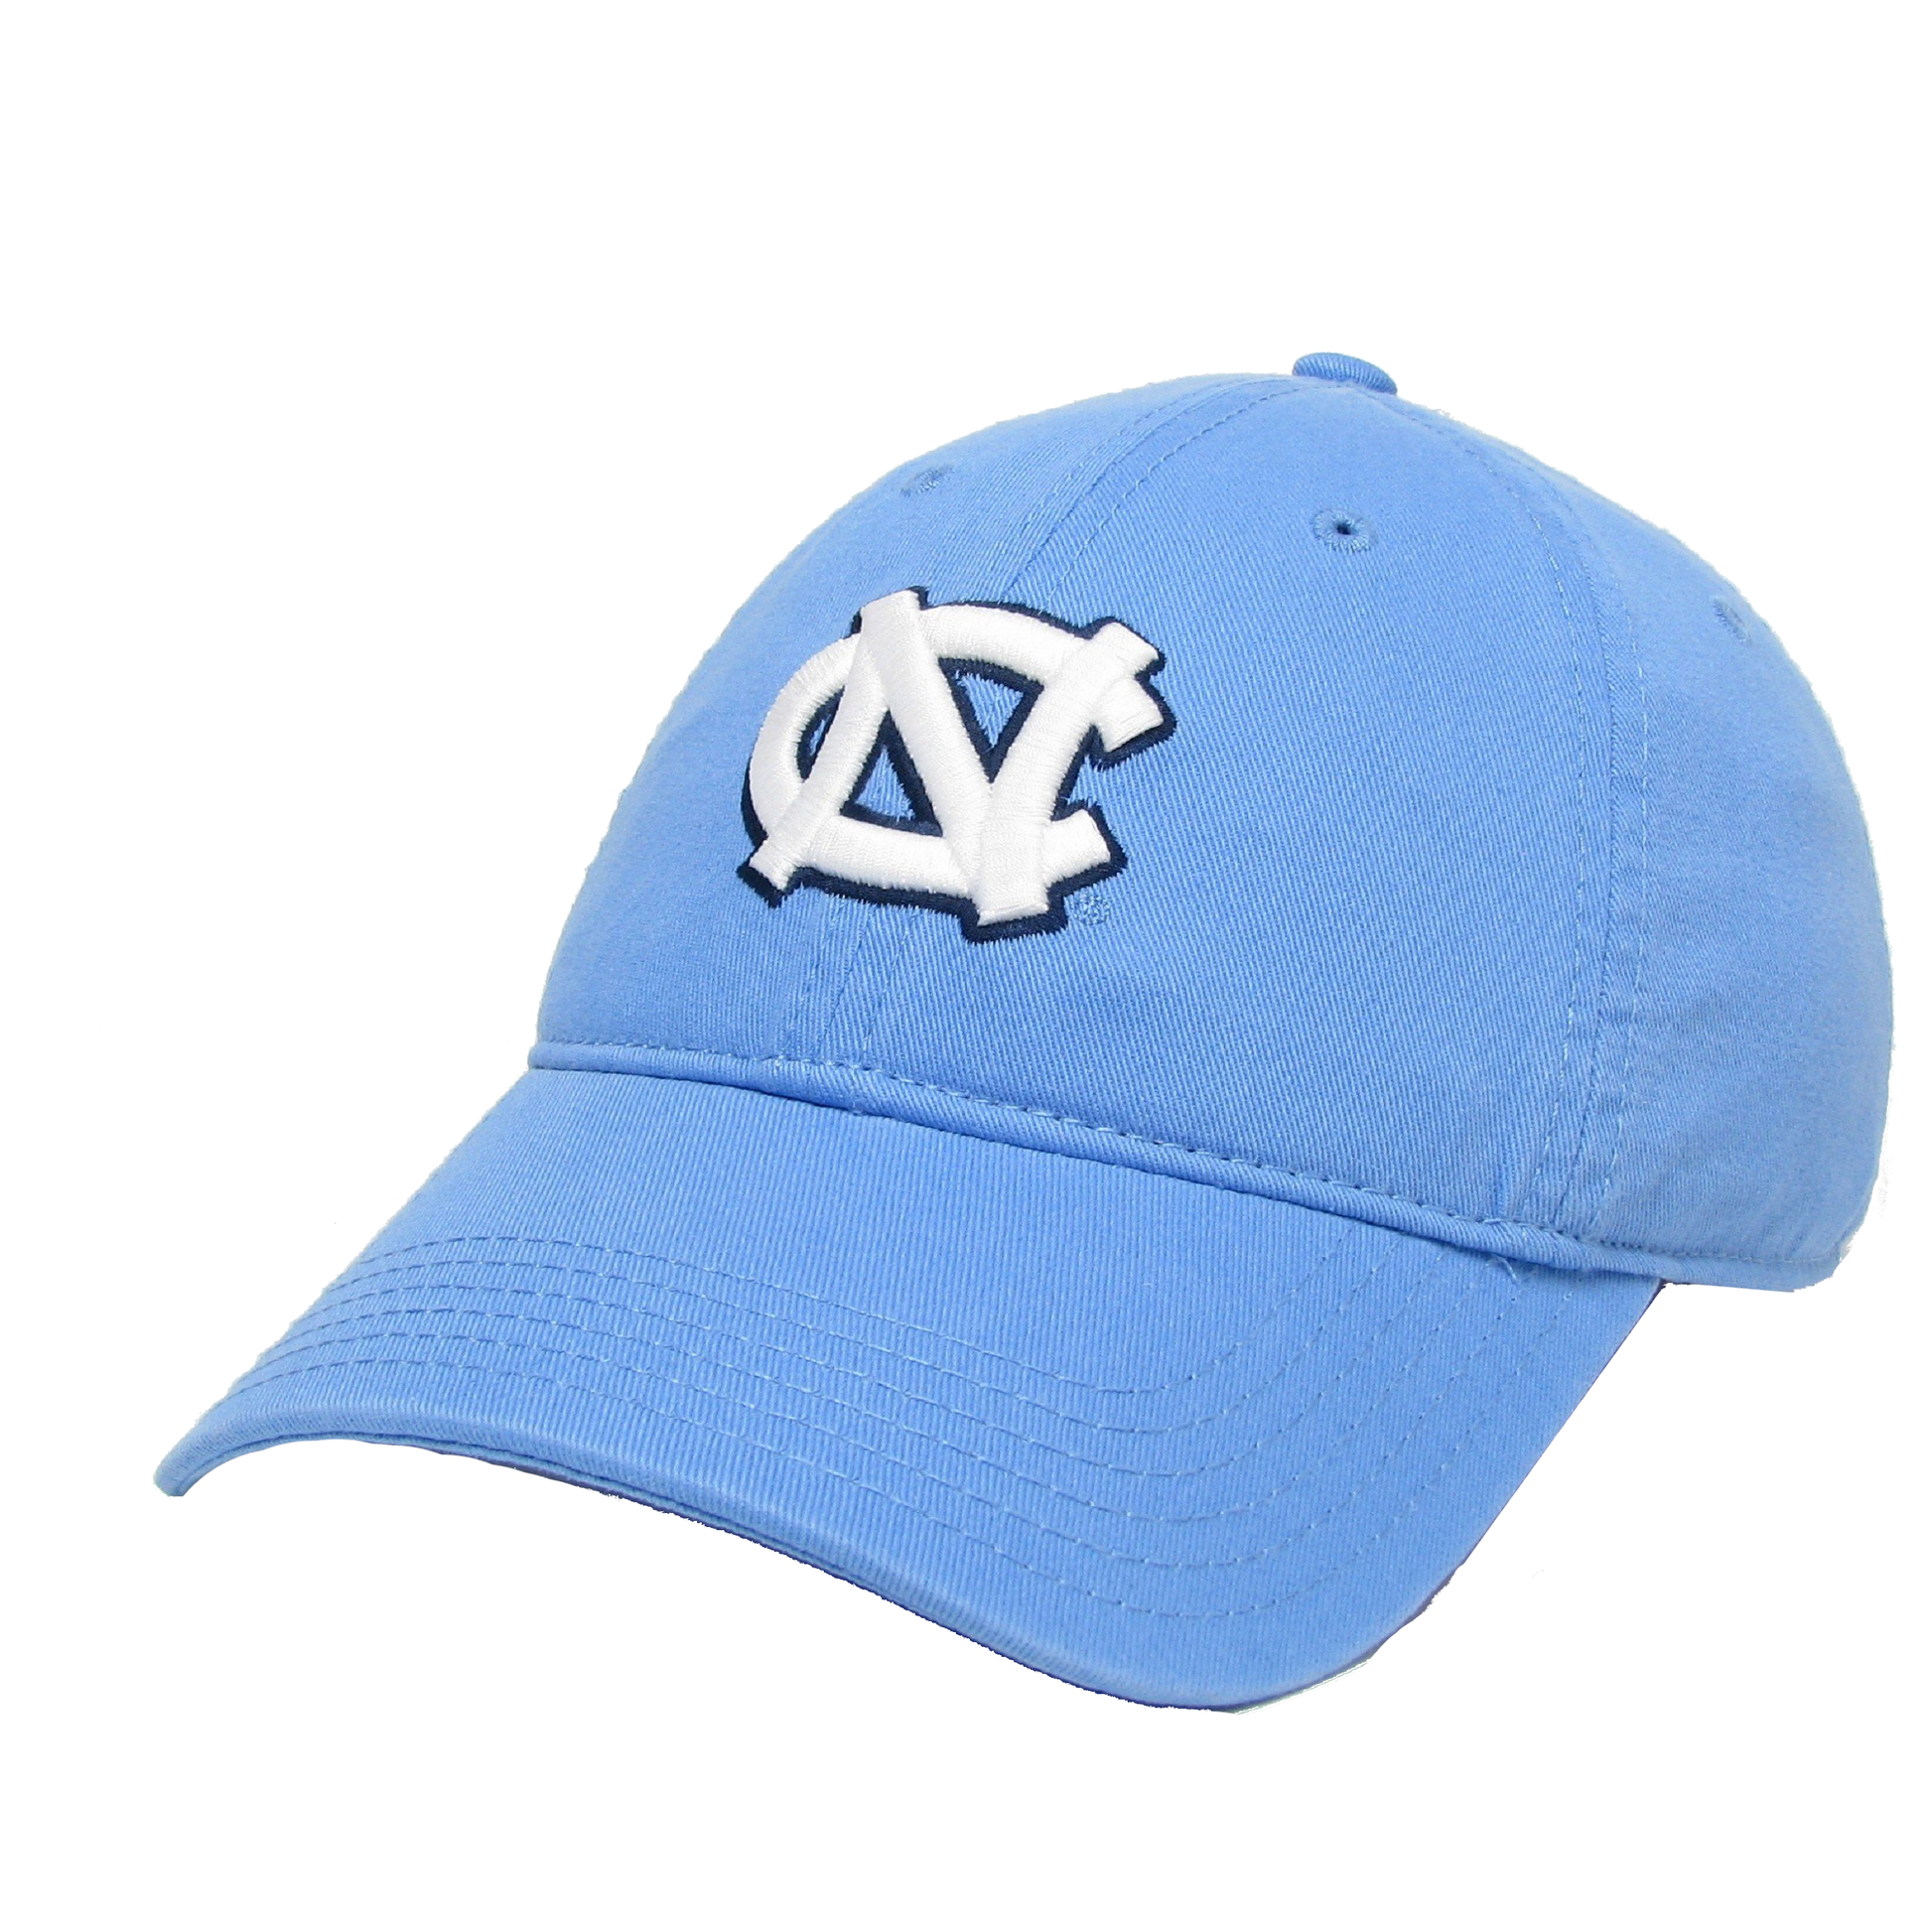 blue la dodgers hat on head